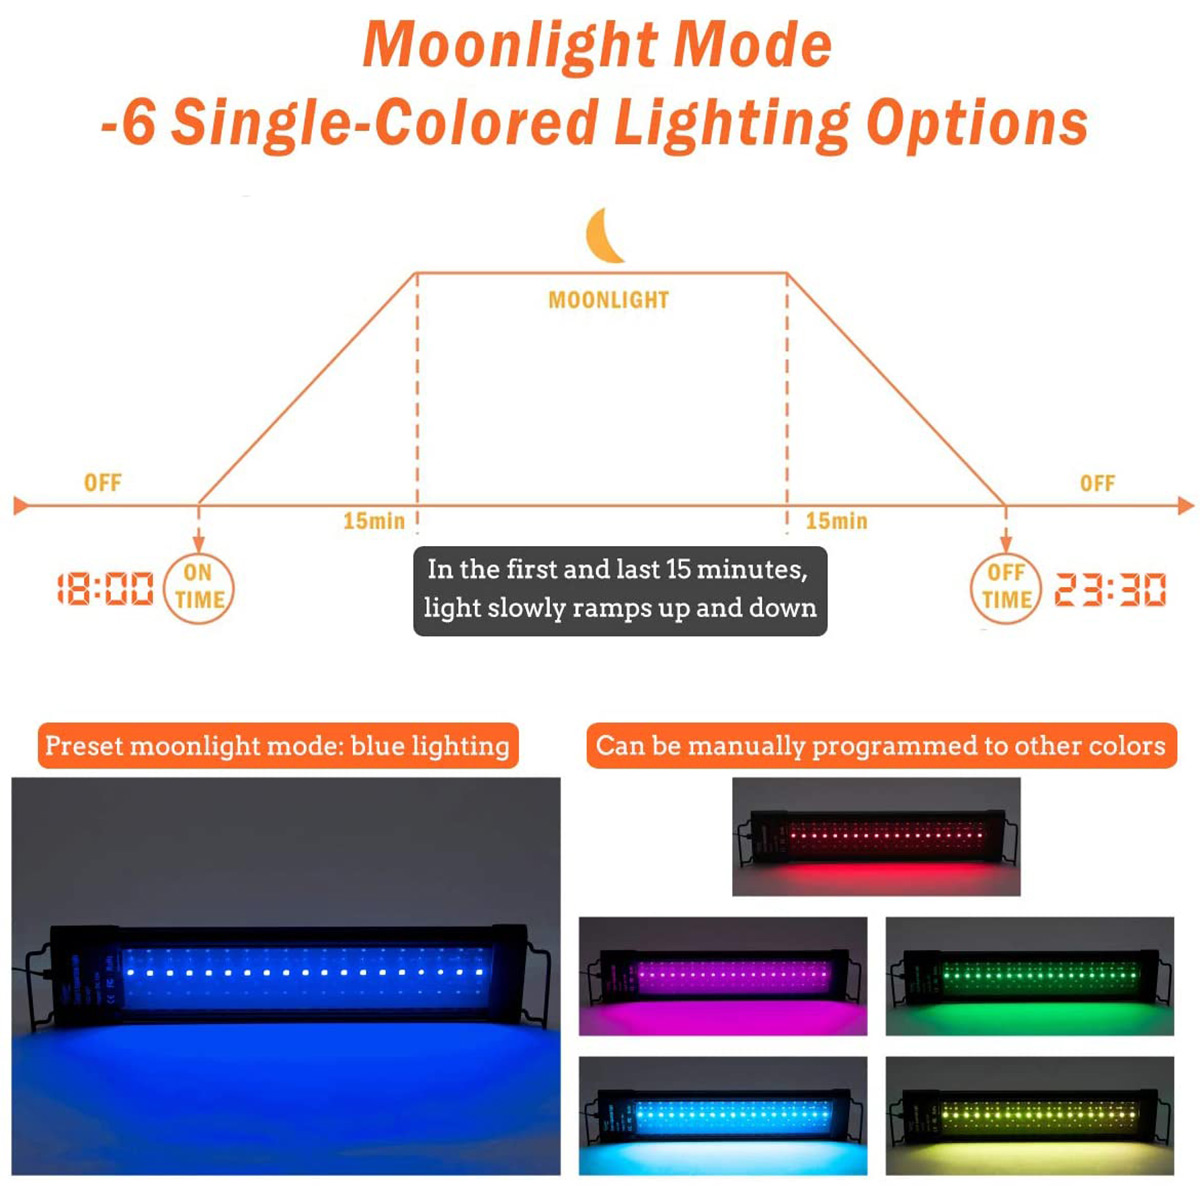 Hygger Clip On Full Spectrum Aquarium LED Light – Petnanny Store